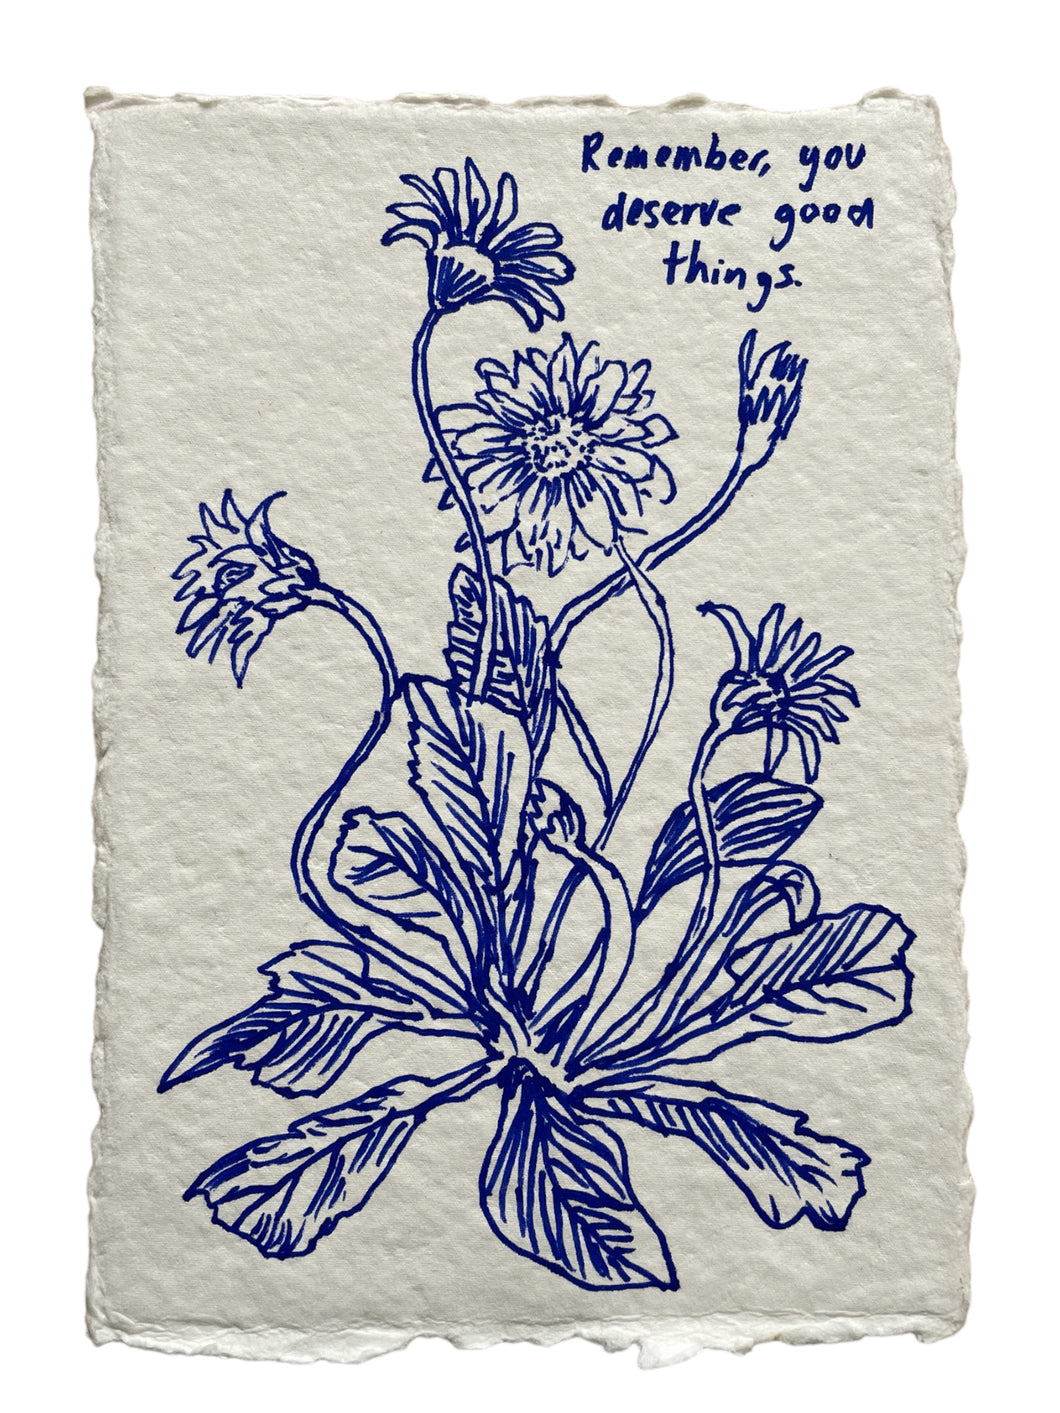 Original Ink Flower Drawing on Handmade Paper You Deserve Good Things